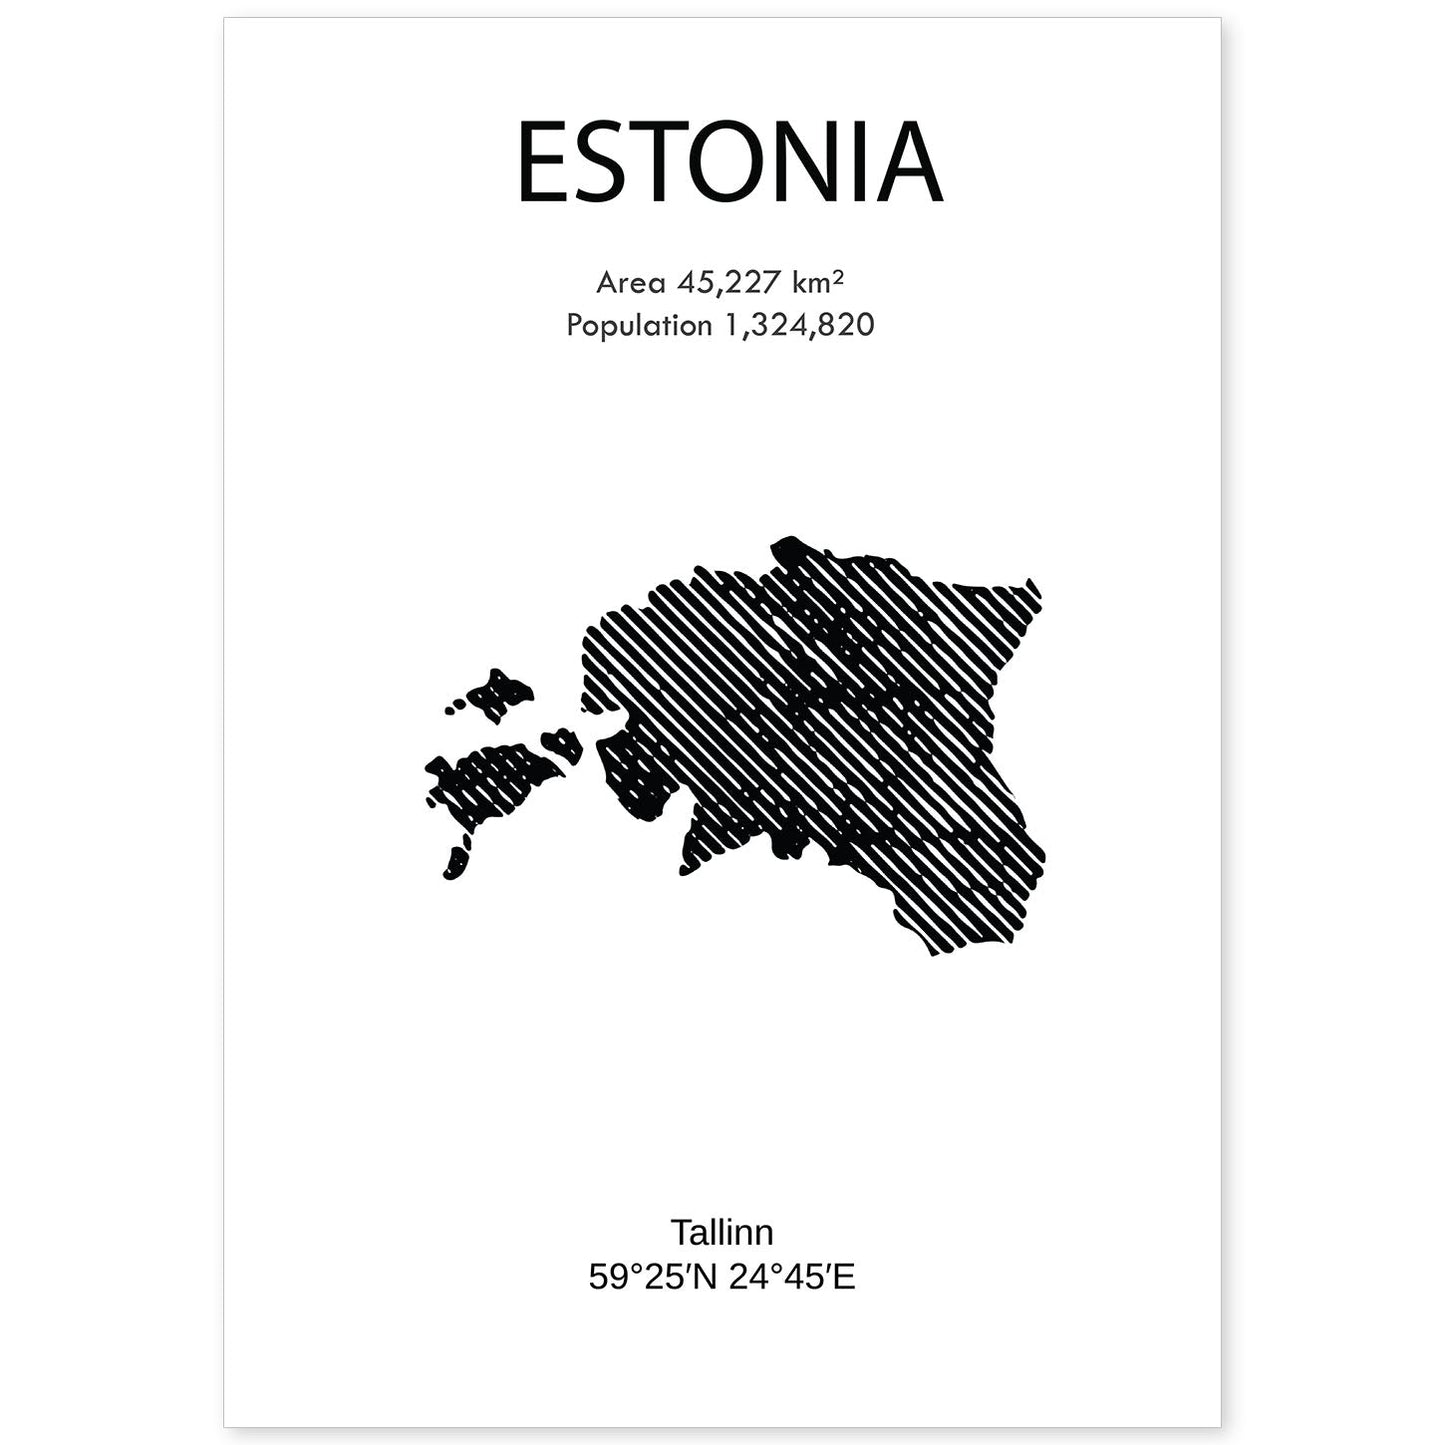 Poster de Estonia. Láminas de paises y continentes del mundo.-Artwork-Nacnic-A4-Sin marco-Nacnic Estudio SL